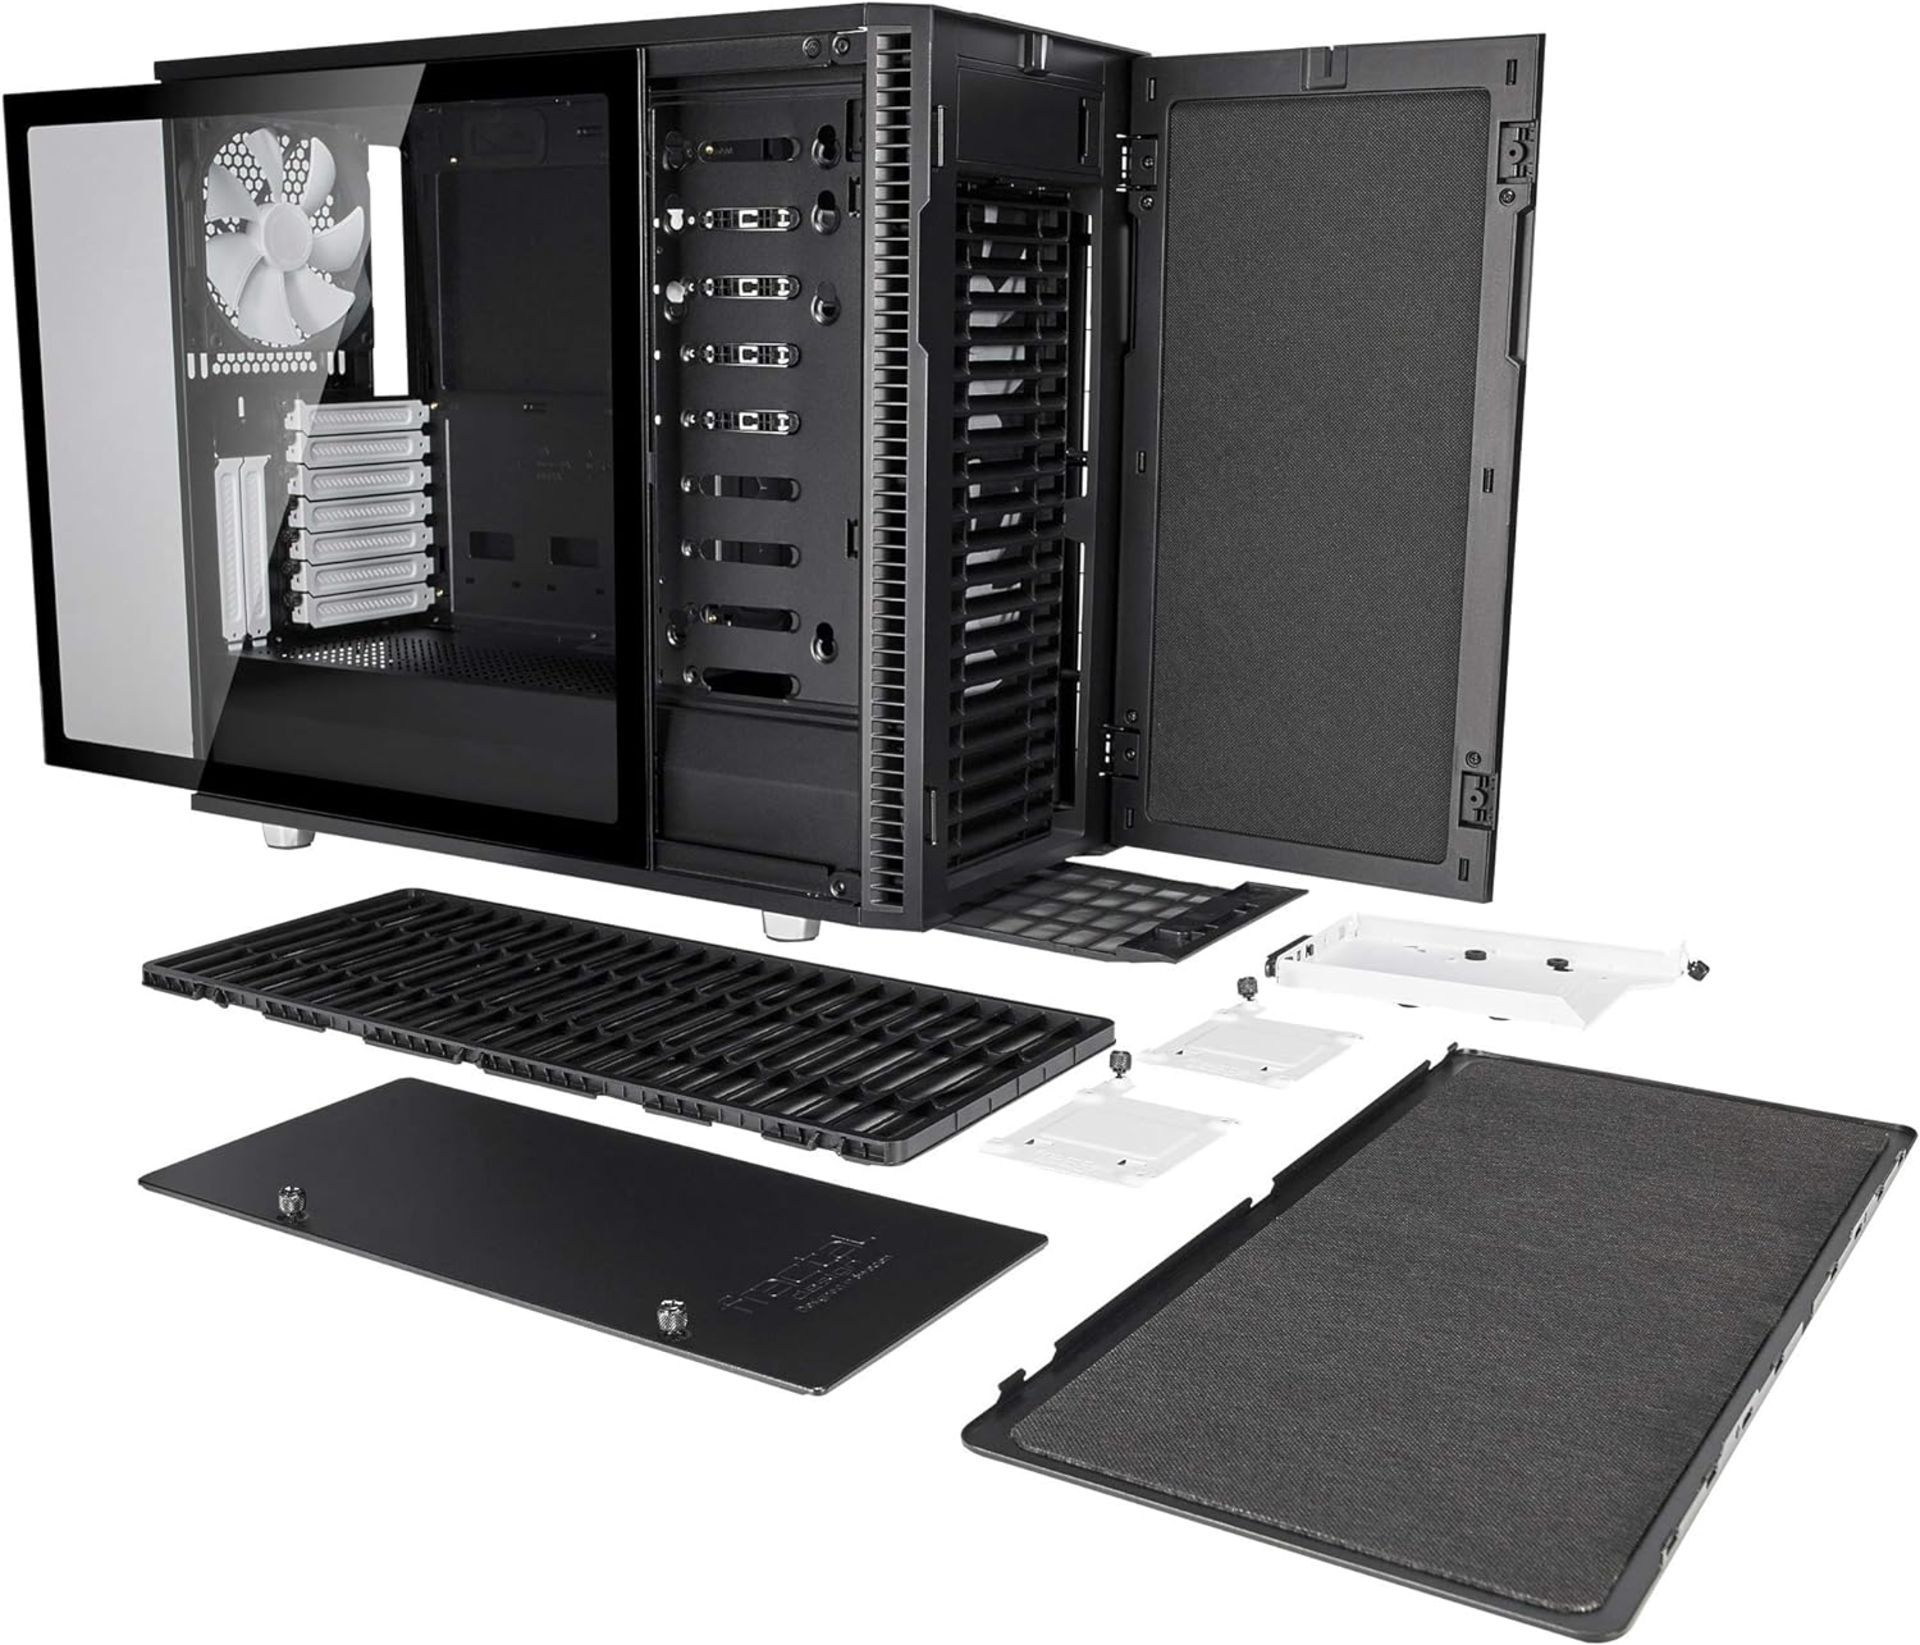 NEW & BOXED FRACTAL DESIGN Define R6 Mid Tower ATX Computer Case- BLACK. RRP £161.94. (R6-7). - Bild 7 aus 8